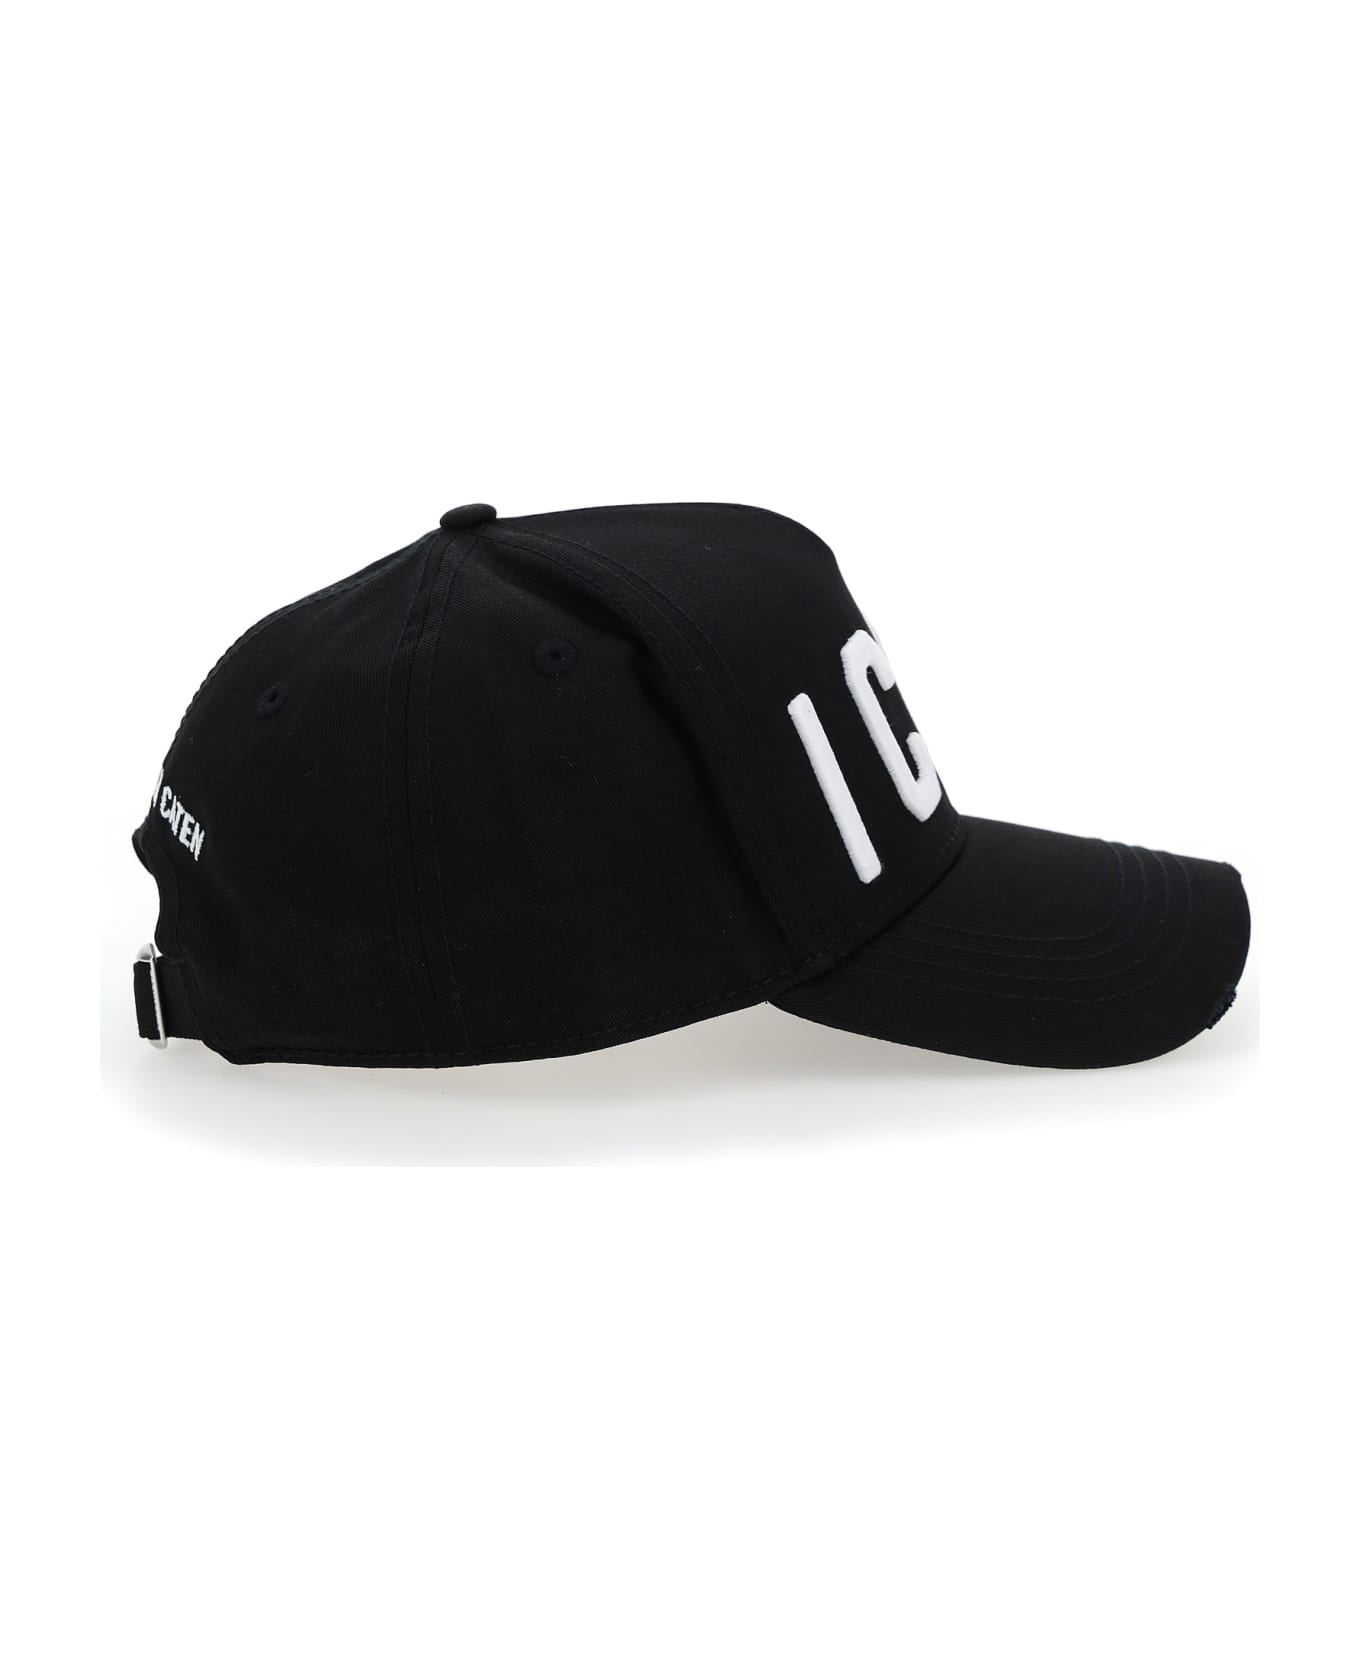 Dsquared2 Baseball Hat - Black